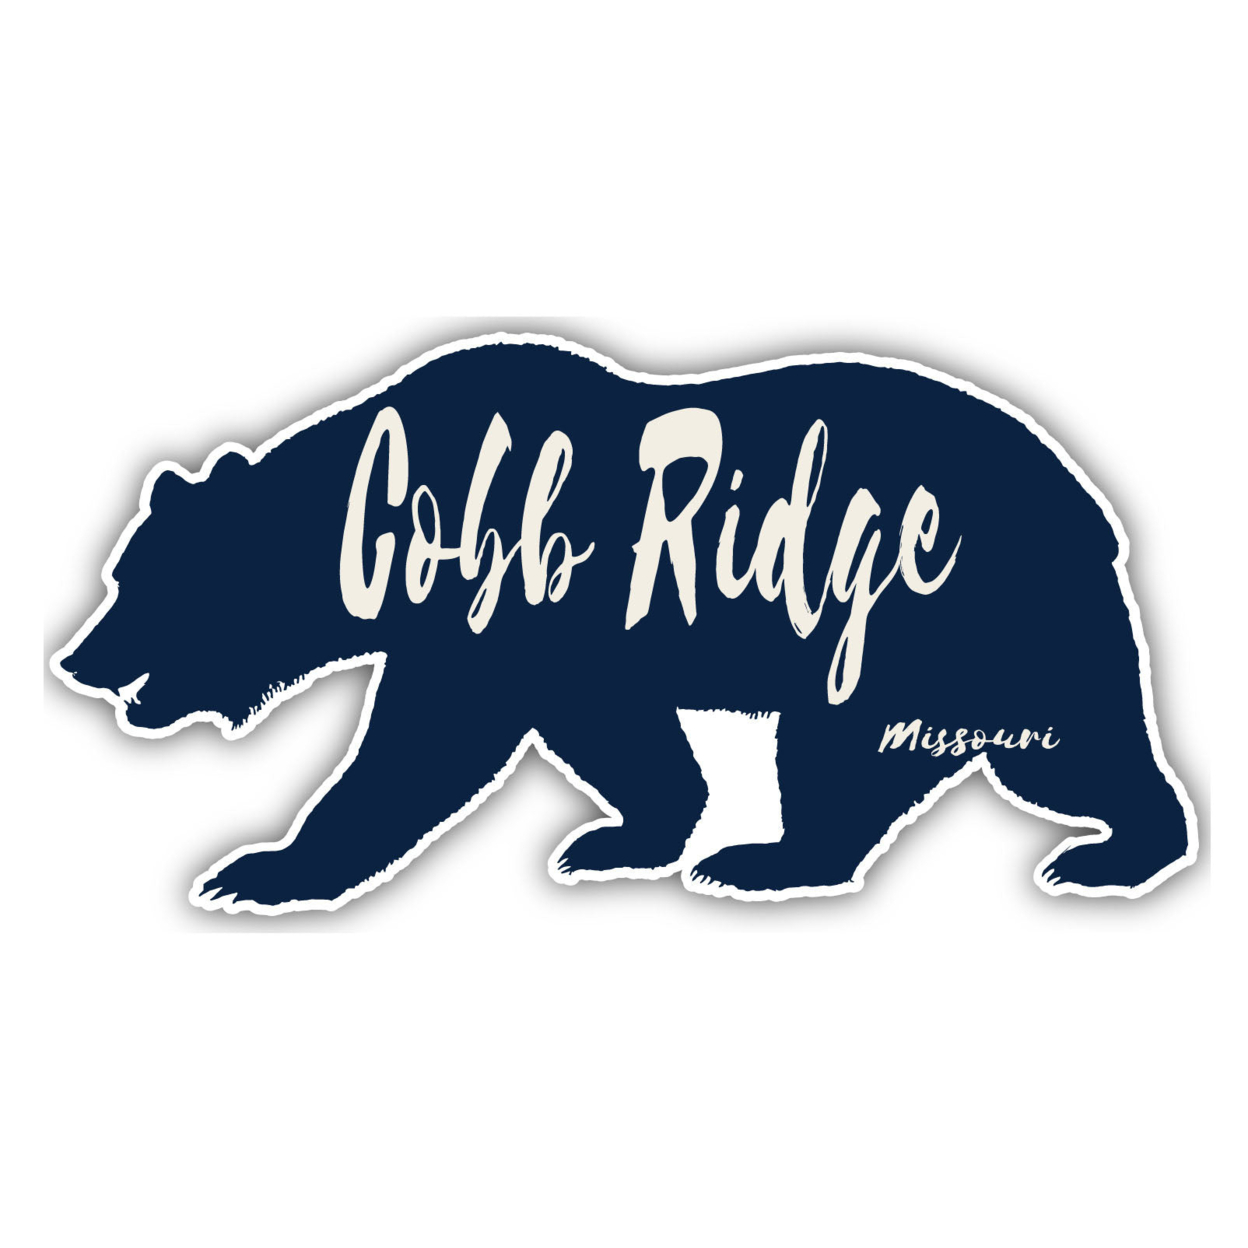 Cobb Ridge Missouri Souvenir Decorative Stickers (Choose Theme And Size) - Single Unit, 10-Inch, Bear